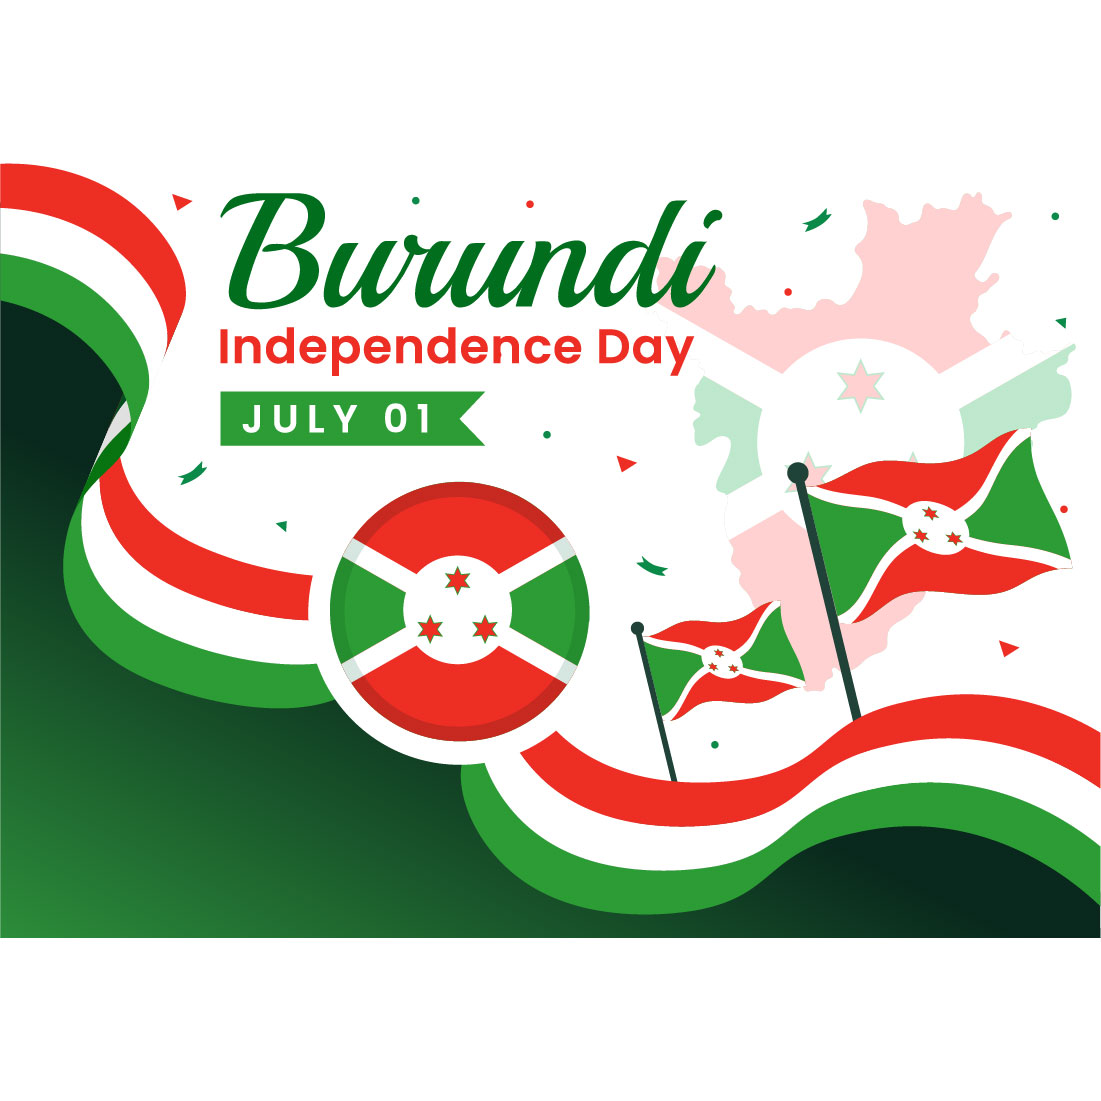 12 Burundi Independence Day Illustration preview image.